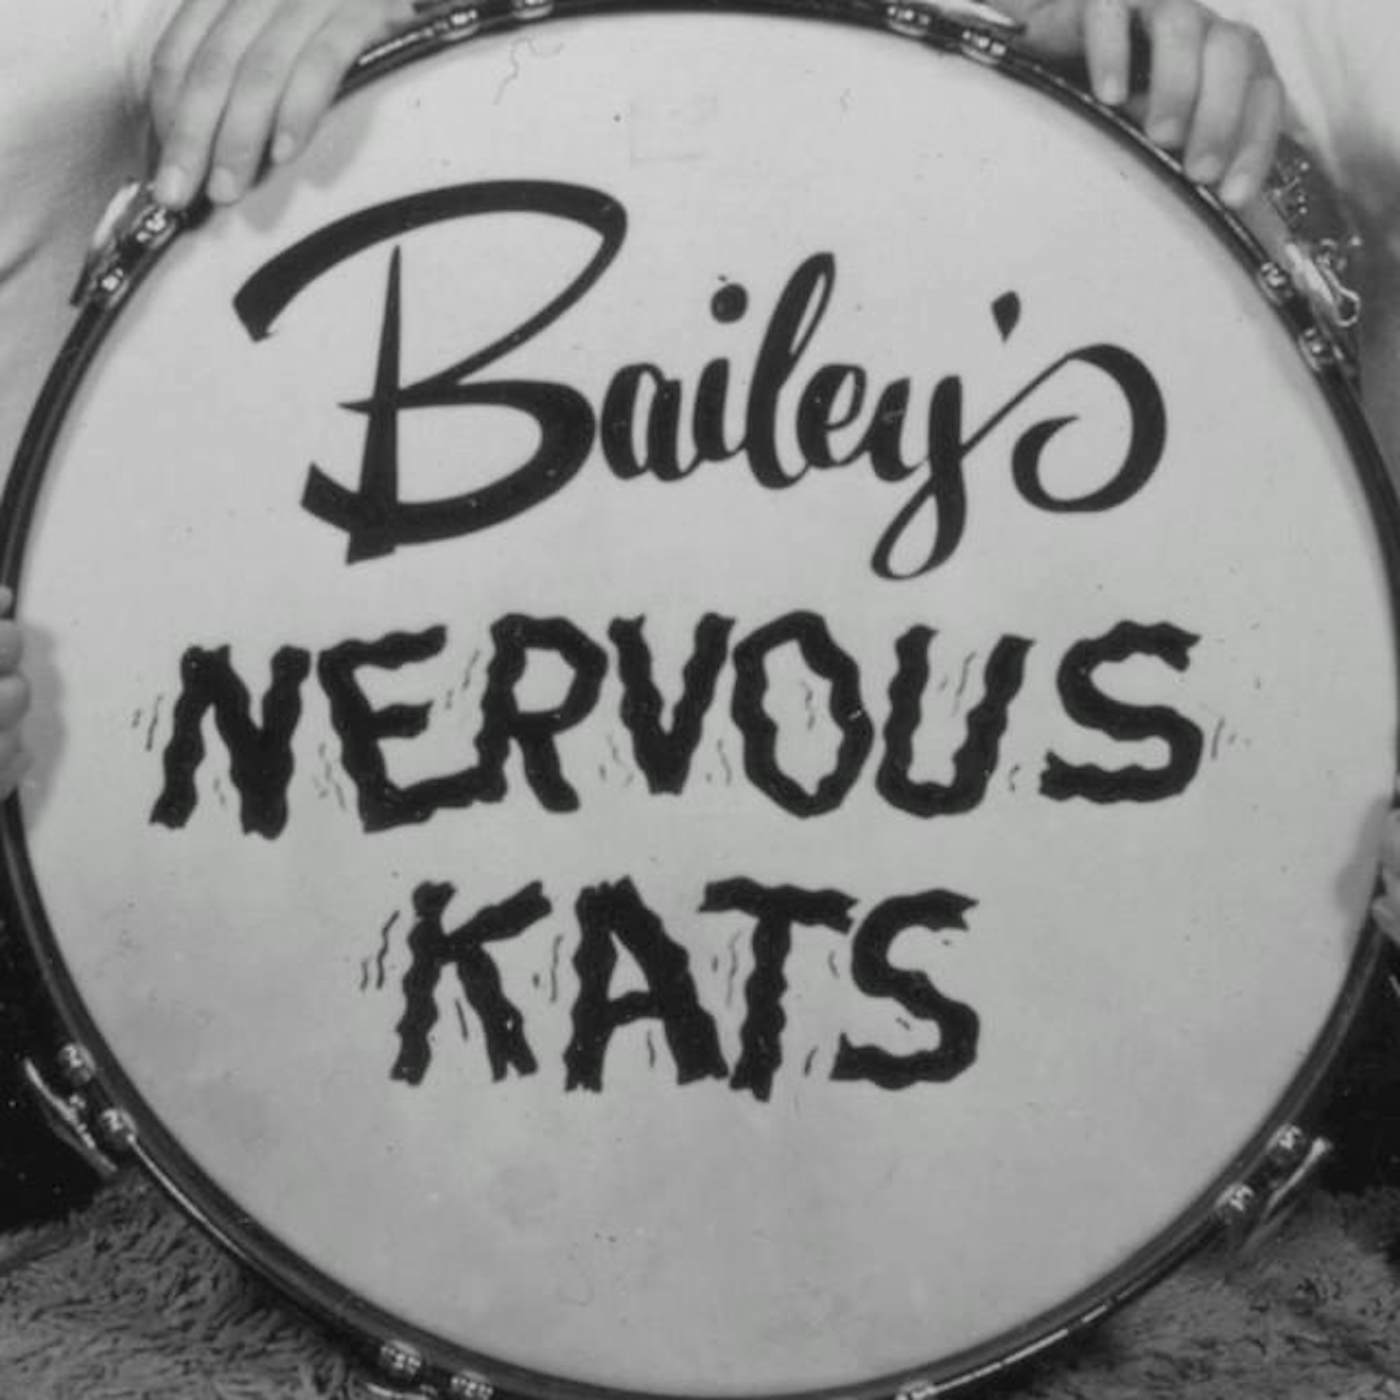 Bailey's Nervous Kats